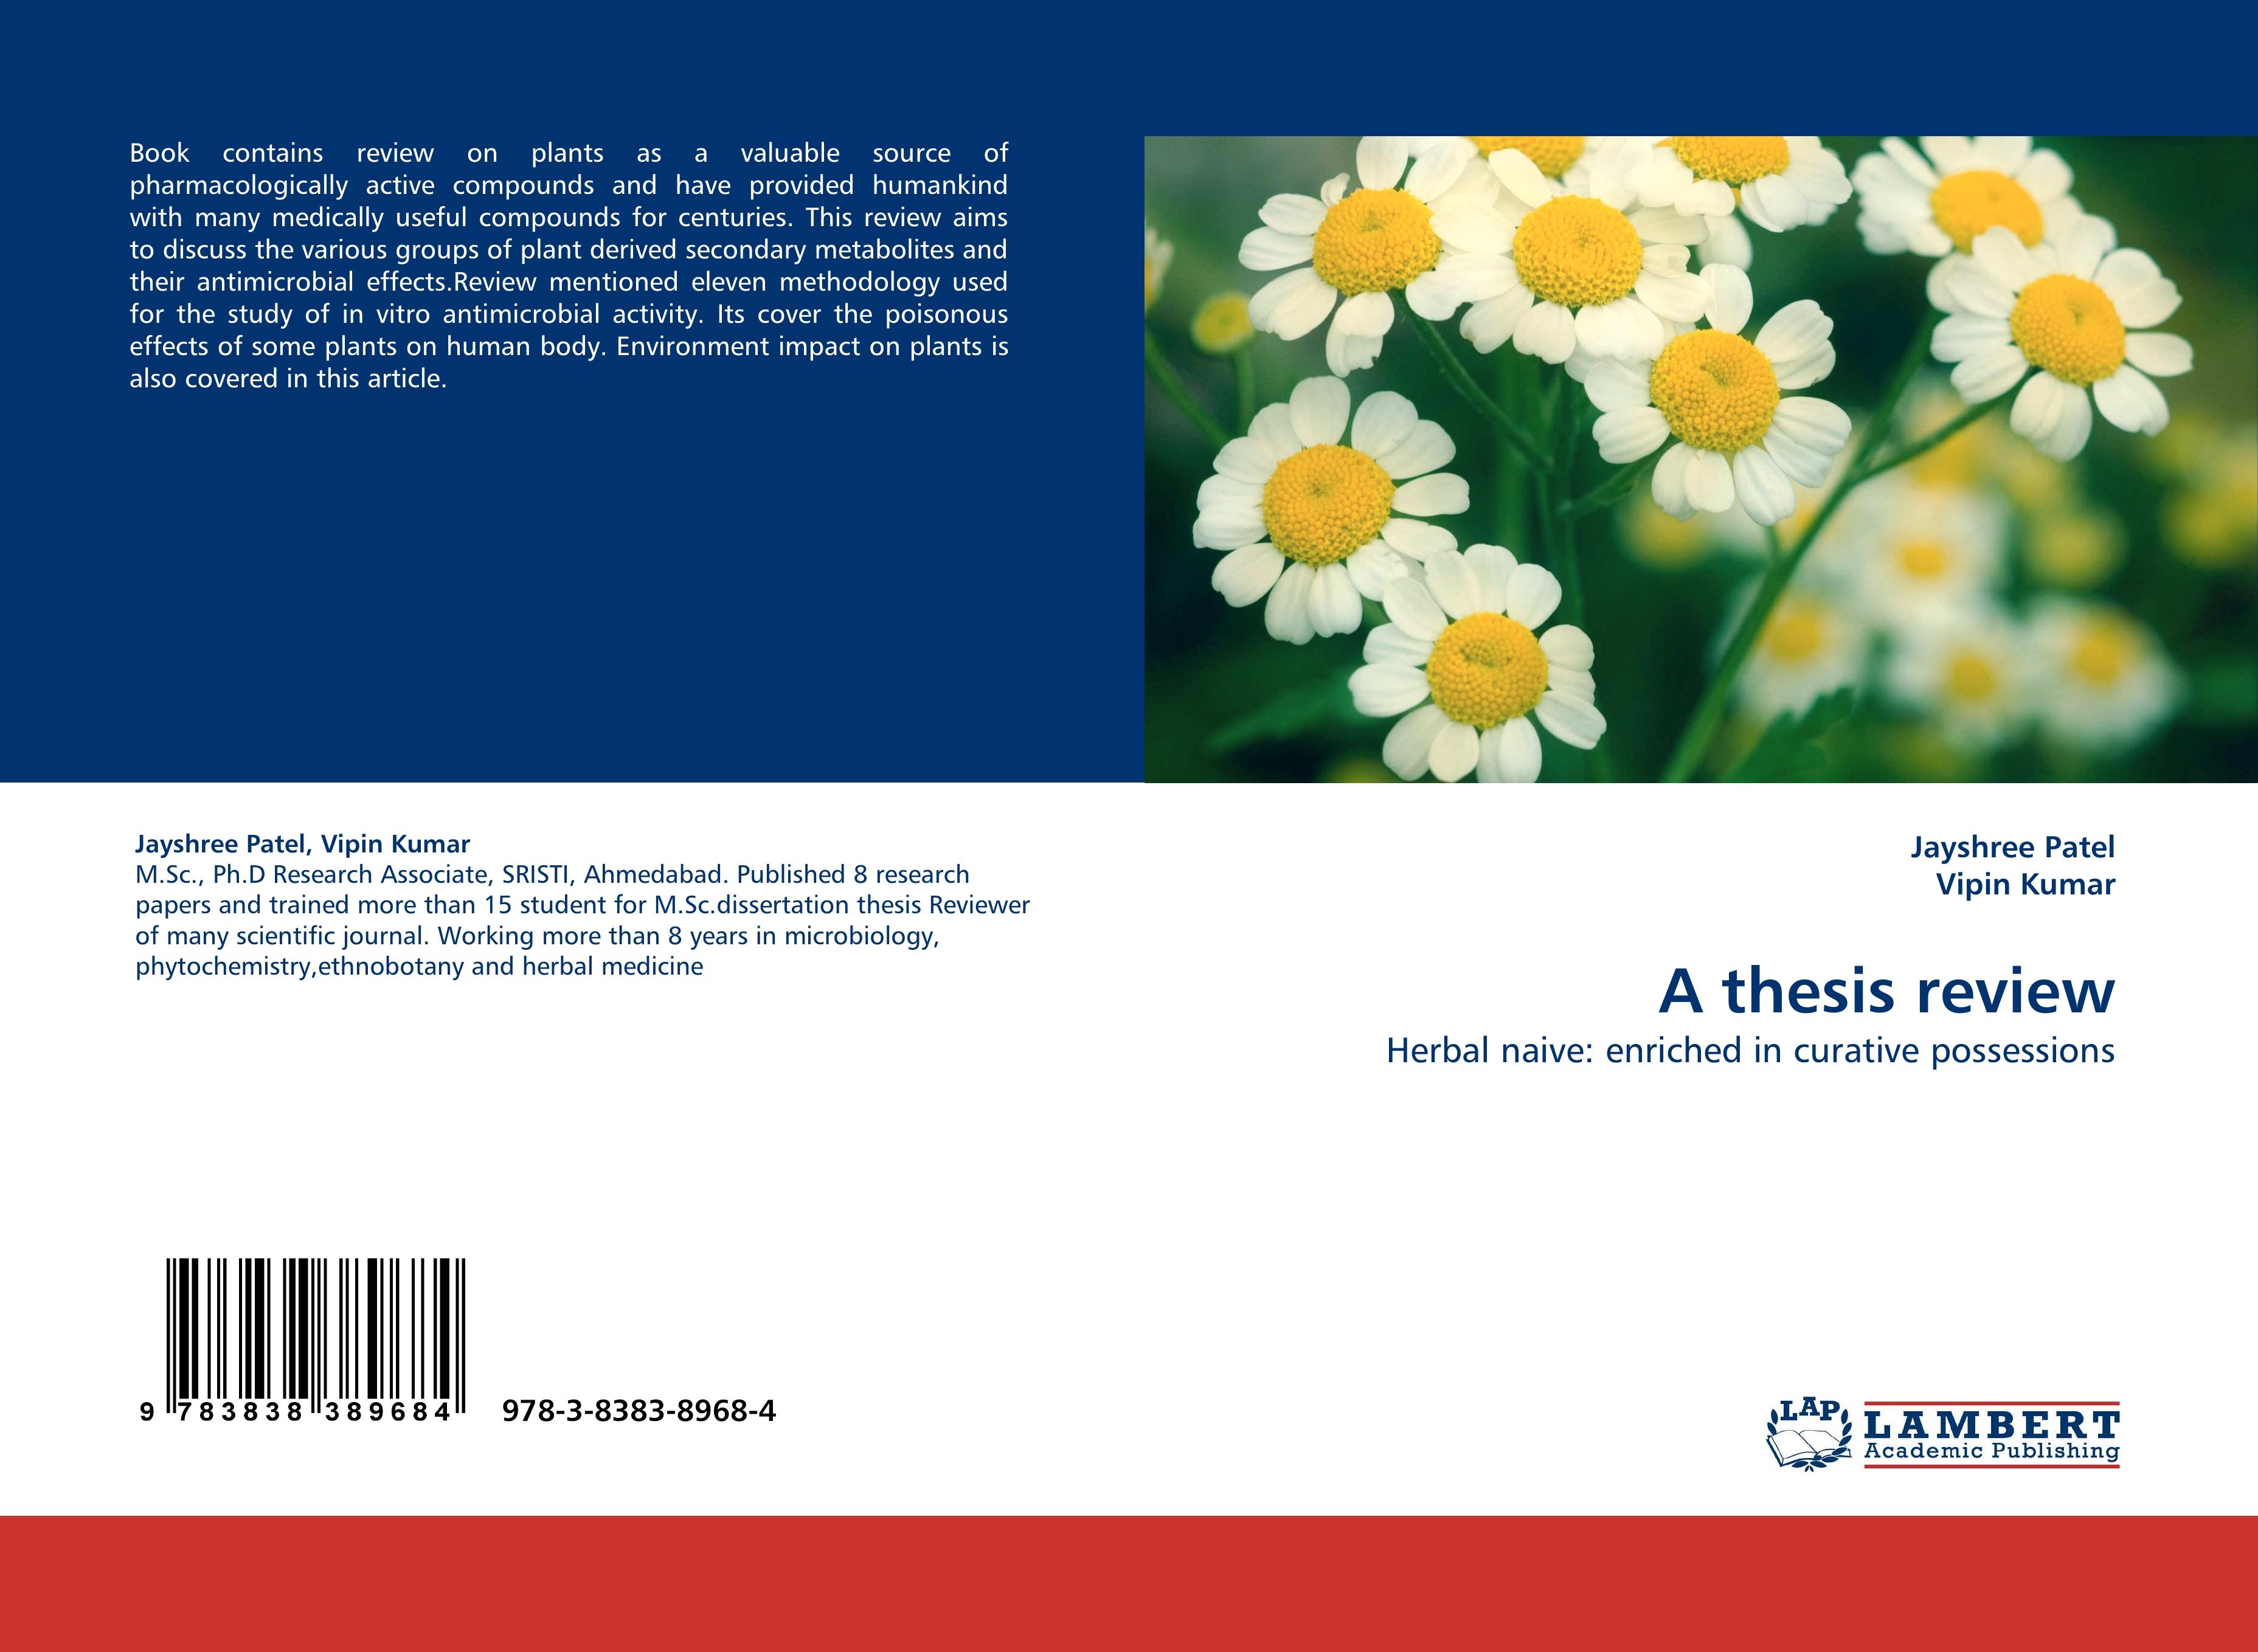 A thesis review - Jayshree Patel Vipin Kumar